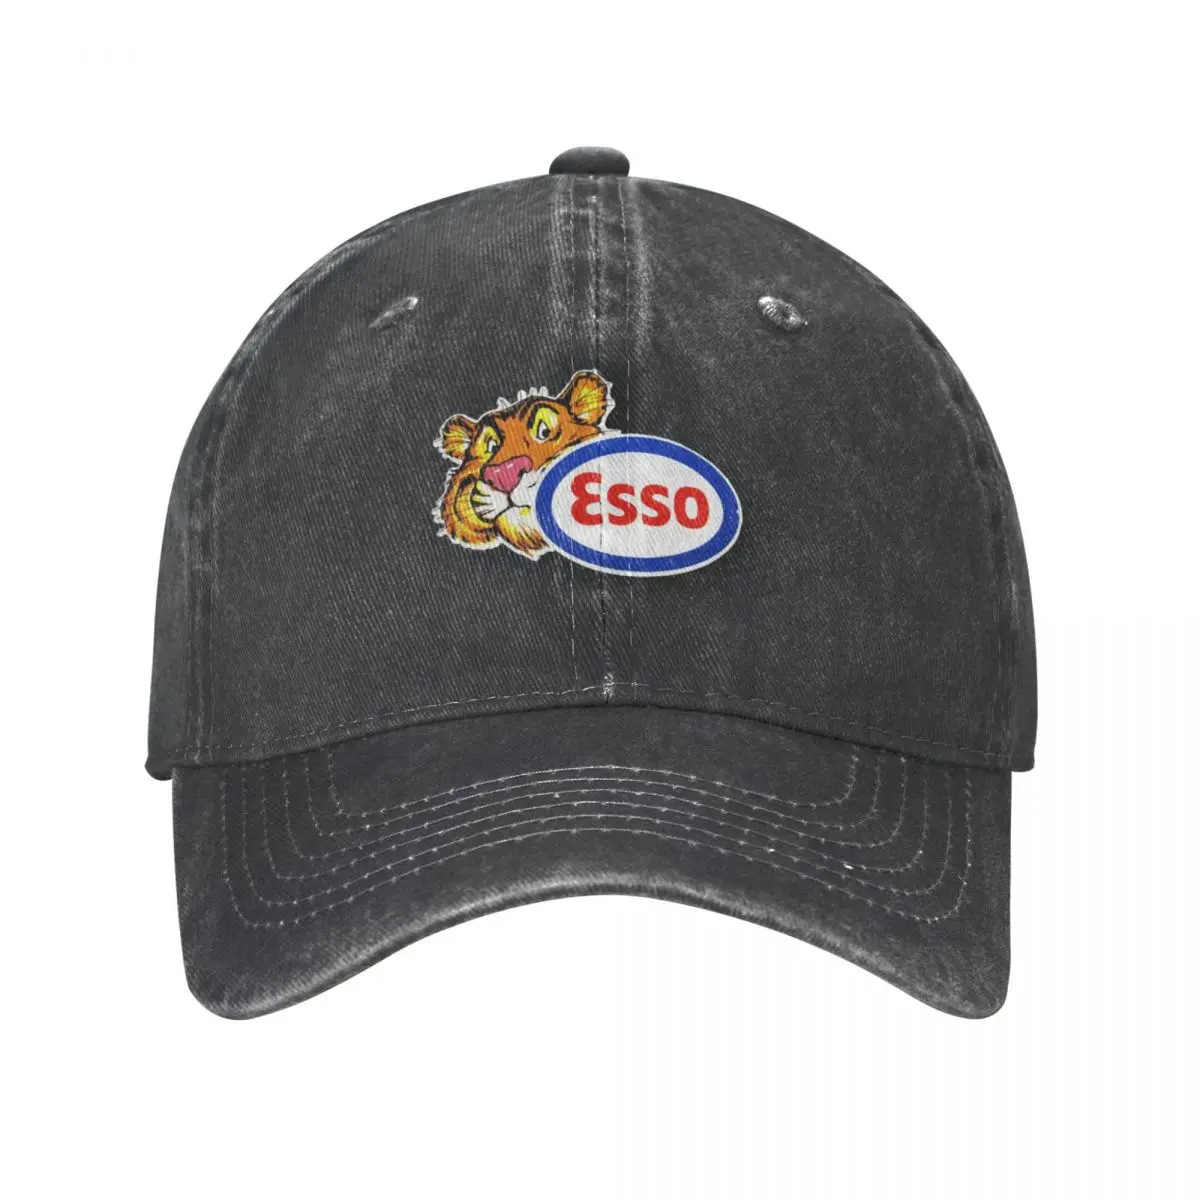 

esso tiger Cap Cowboy Hat wild ball hat baseball cap |-f-| Women's golf clothing Men's